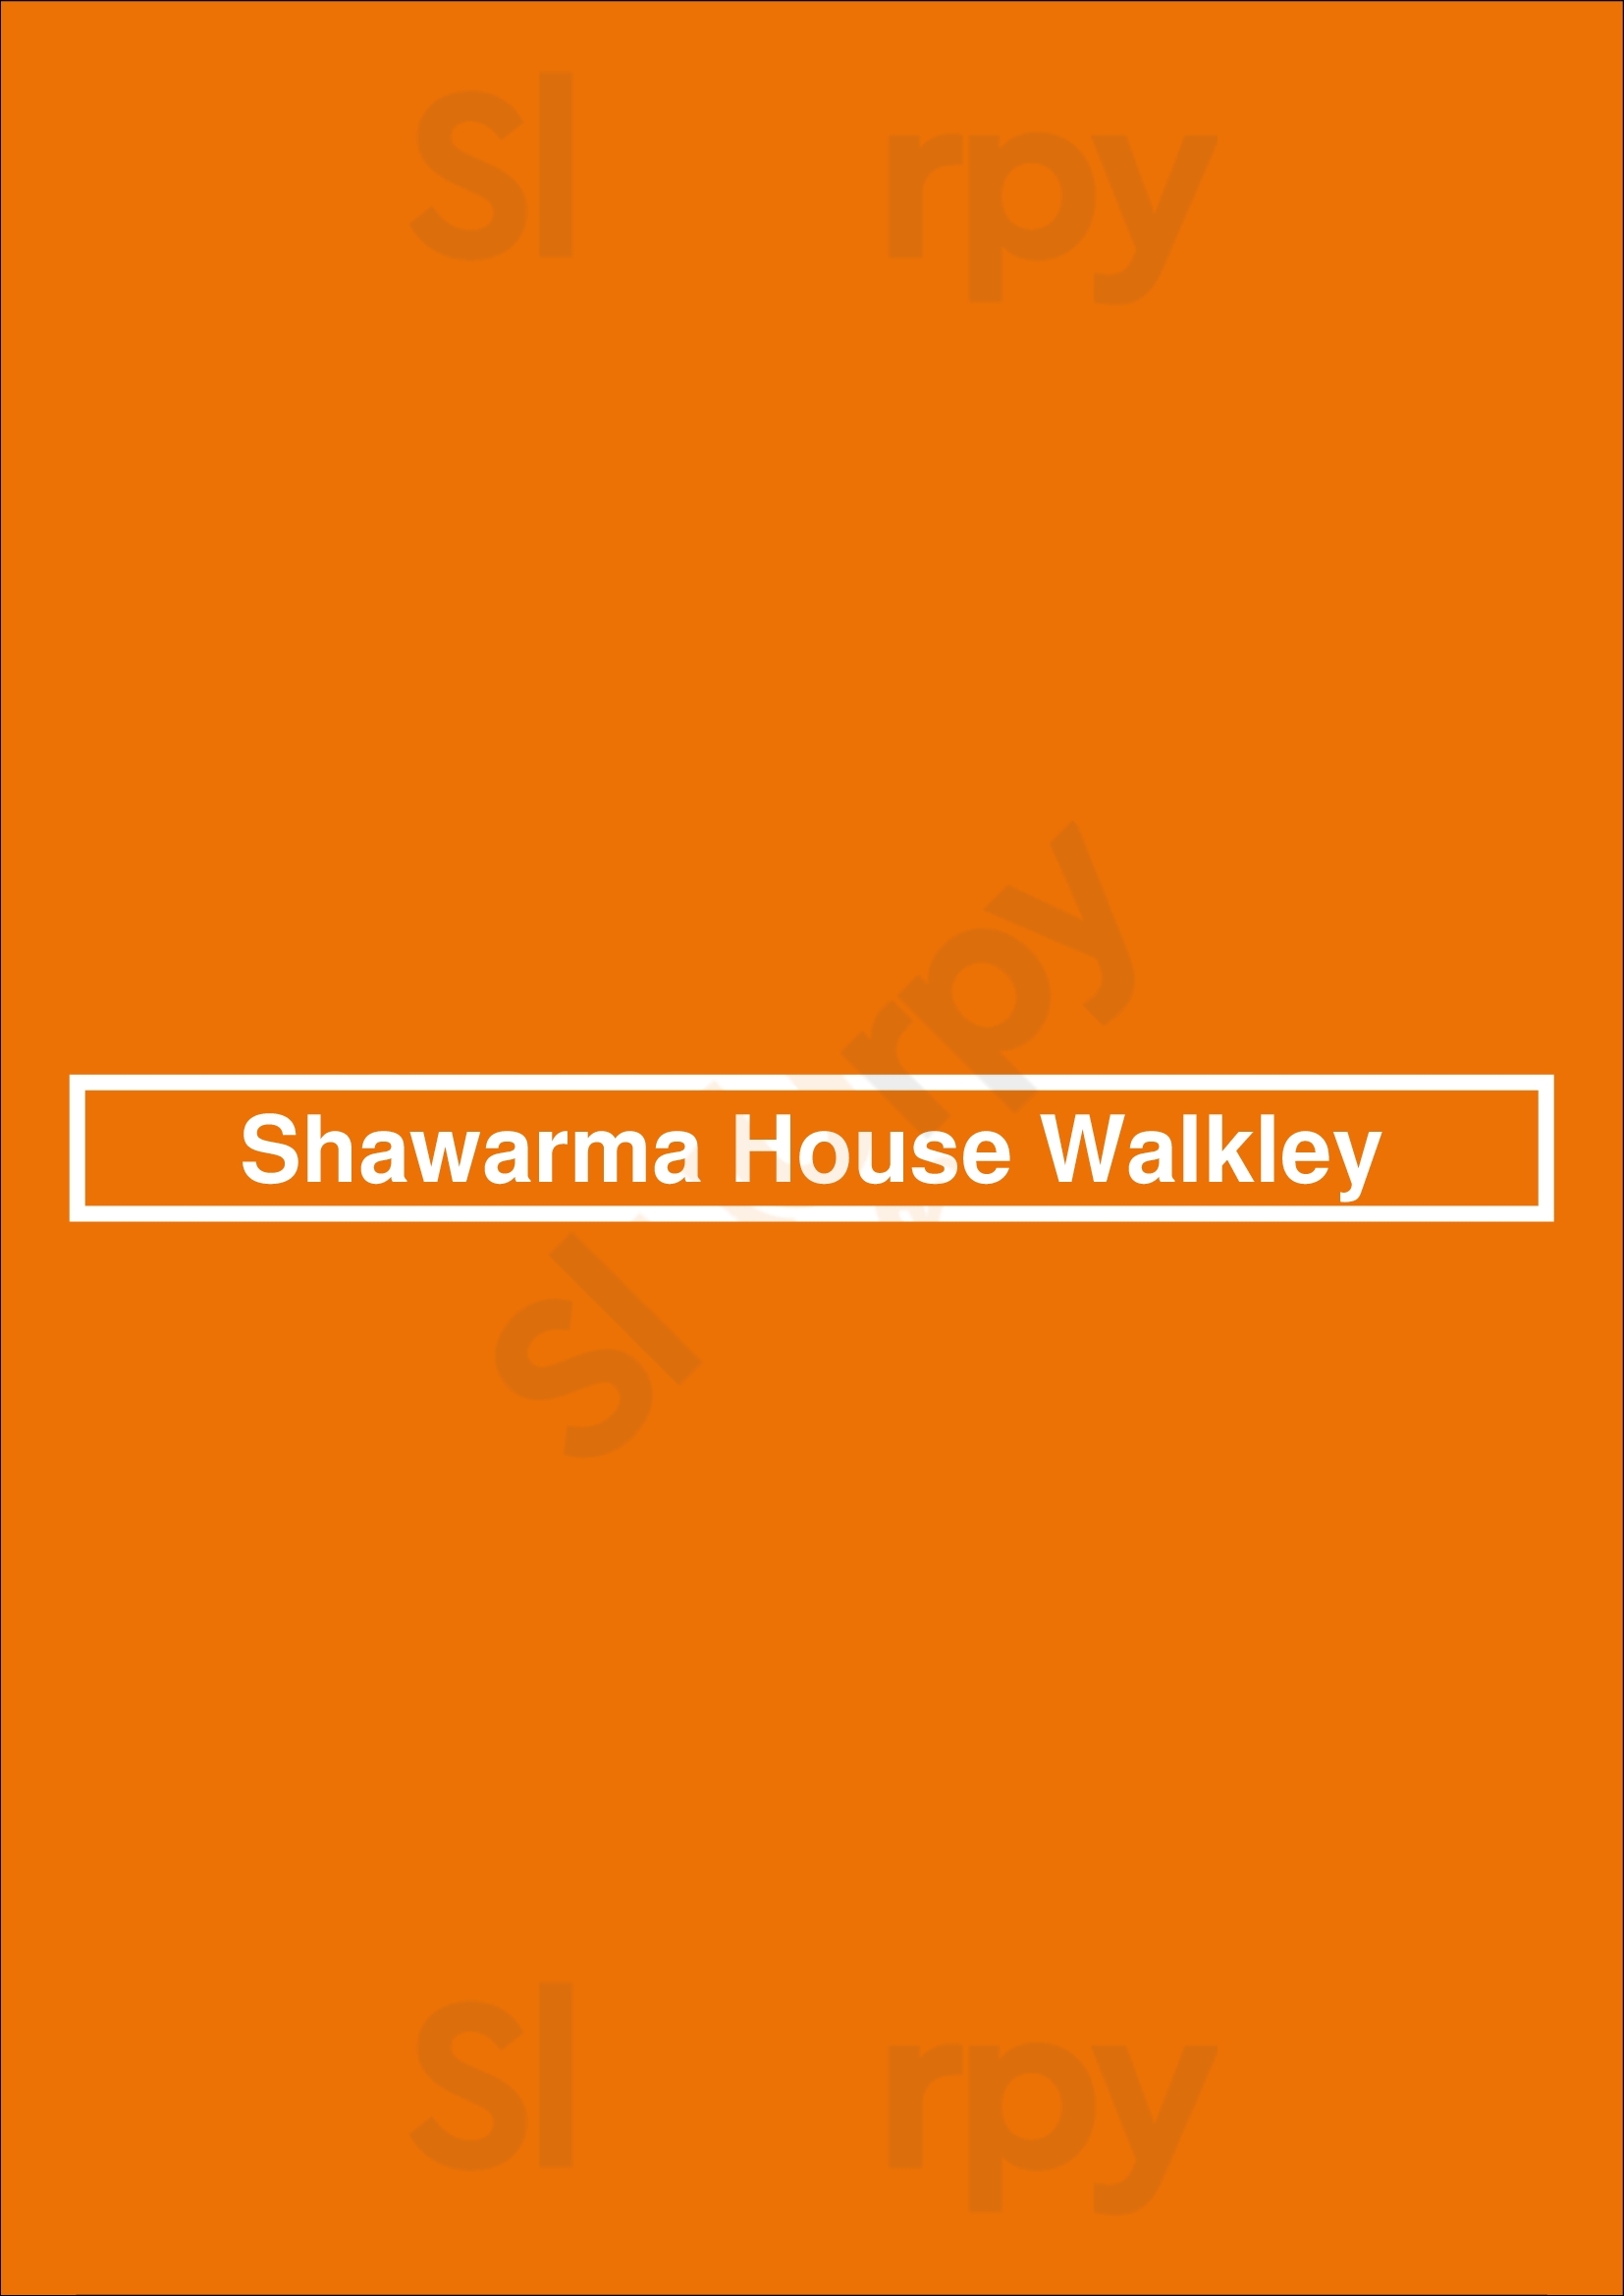 Shawarma House Walkley Ottawa Menu - 1